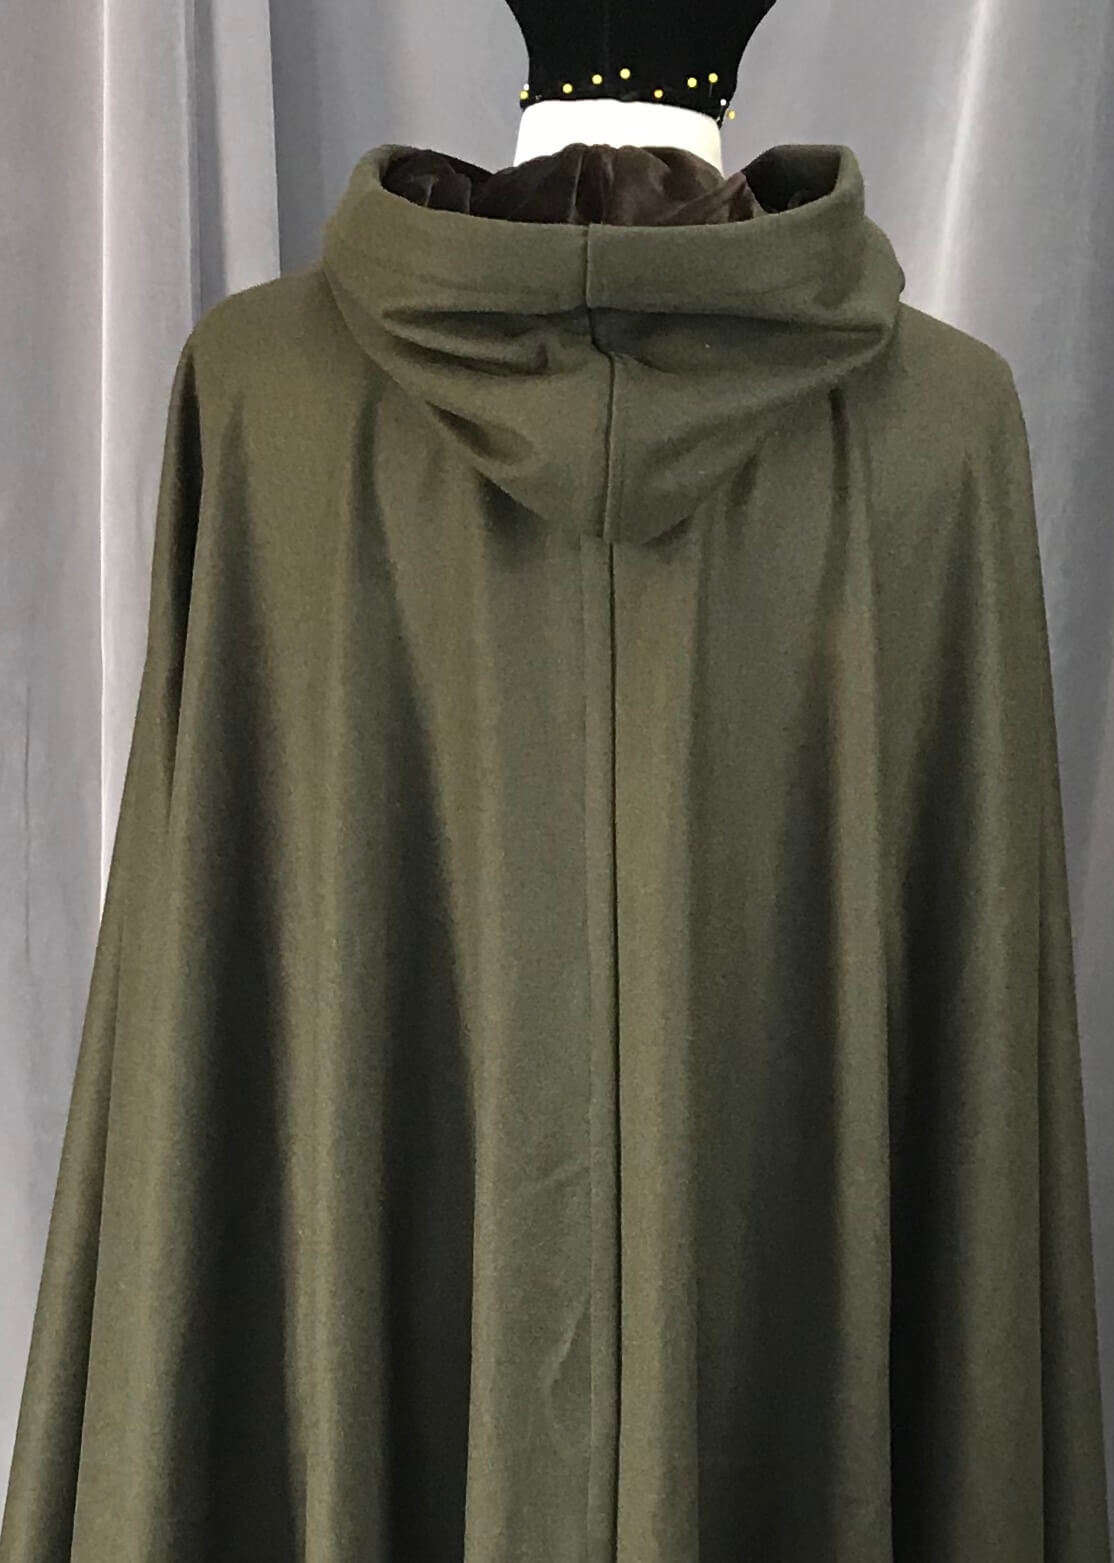 3929 - Dark Moss Green Full Circle Short Cloak, Black Cotton Velvet Hood  Lining, Pewter Triple Medallion Clasp